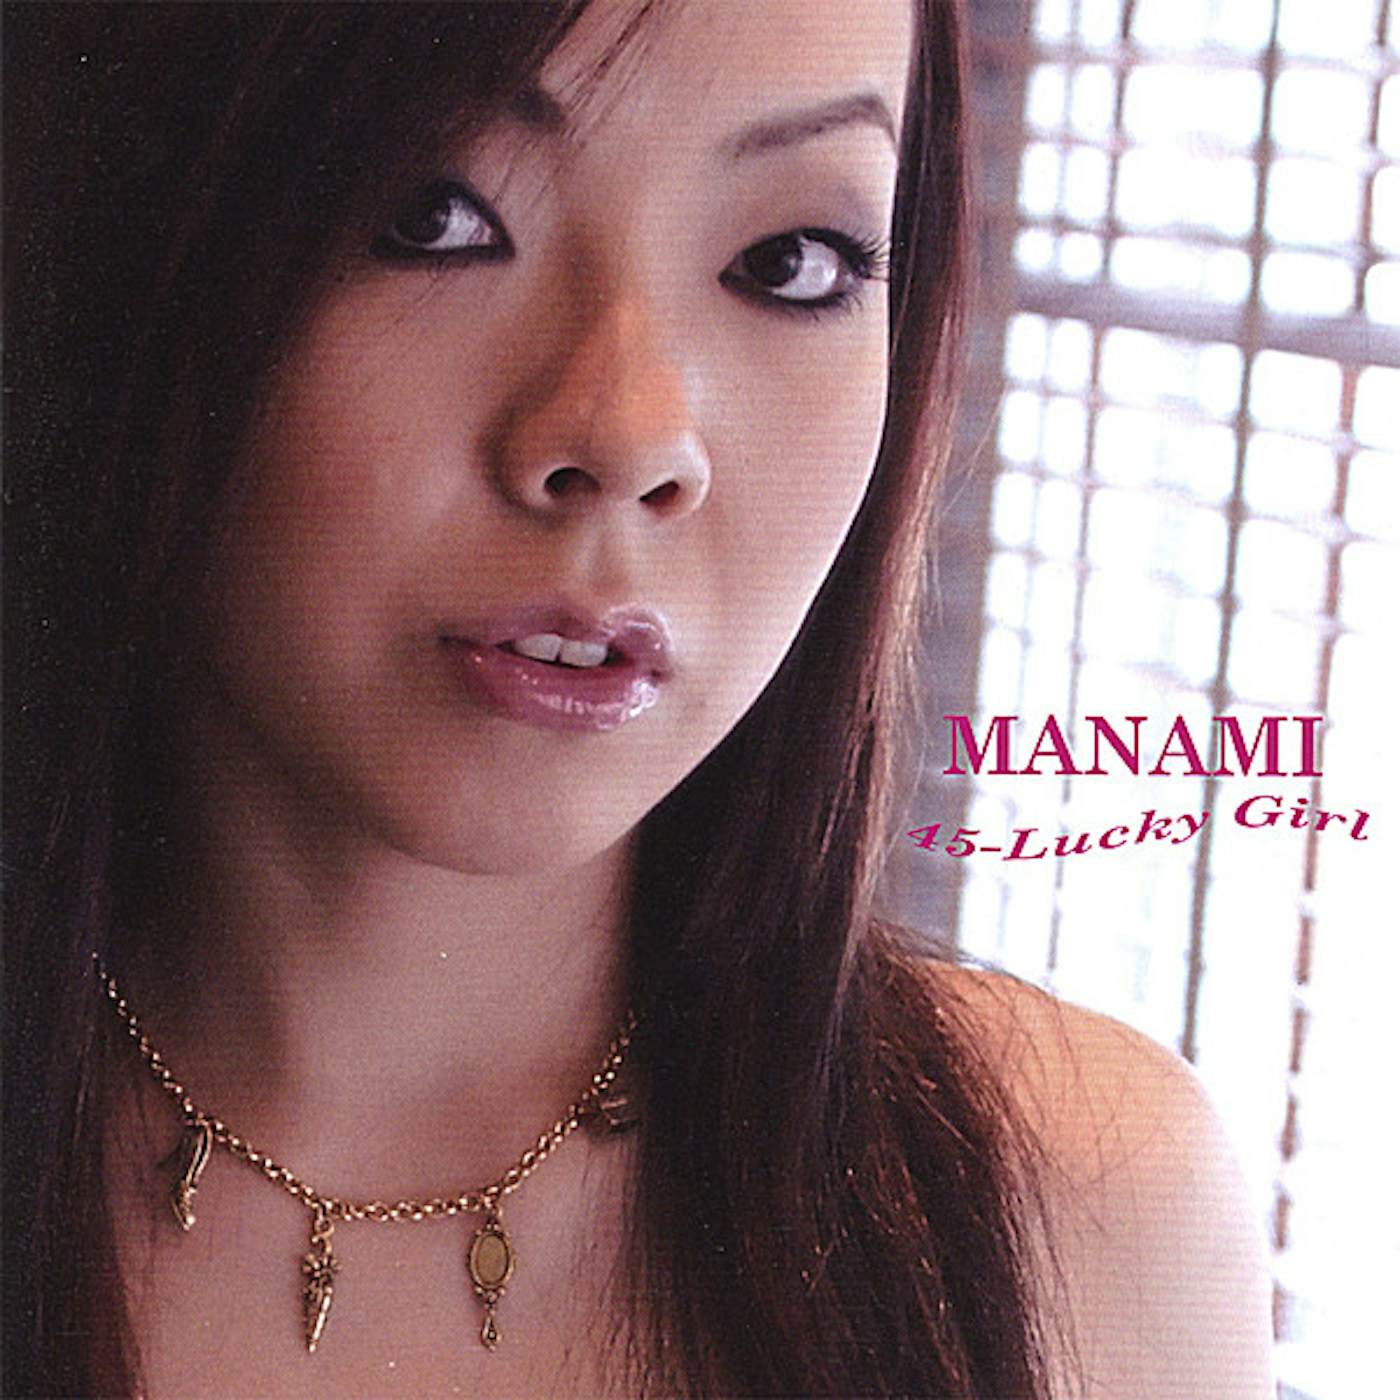 Manami 45-LUCKY GIRL CD